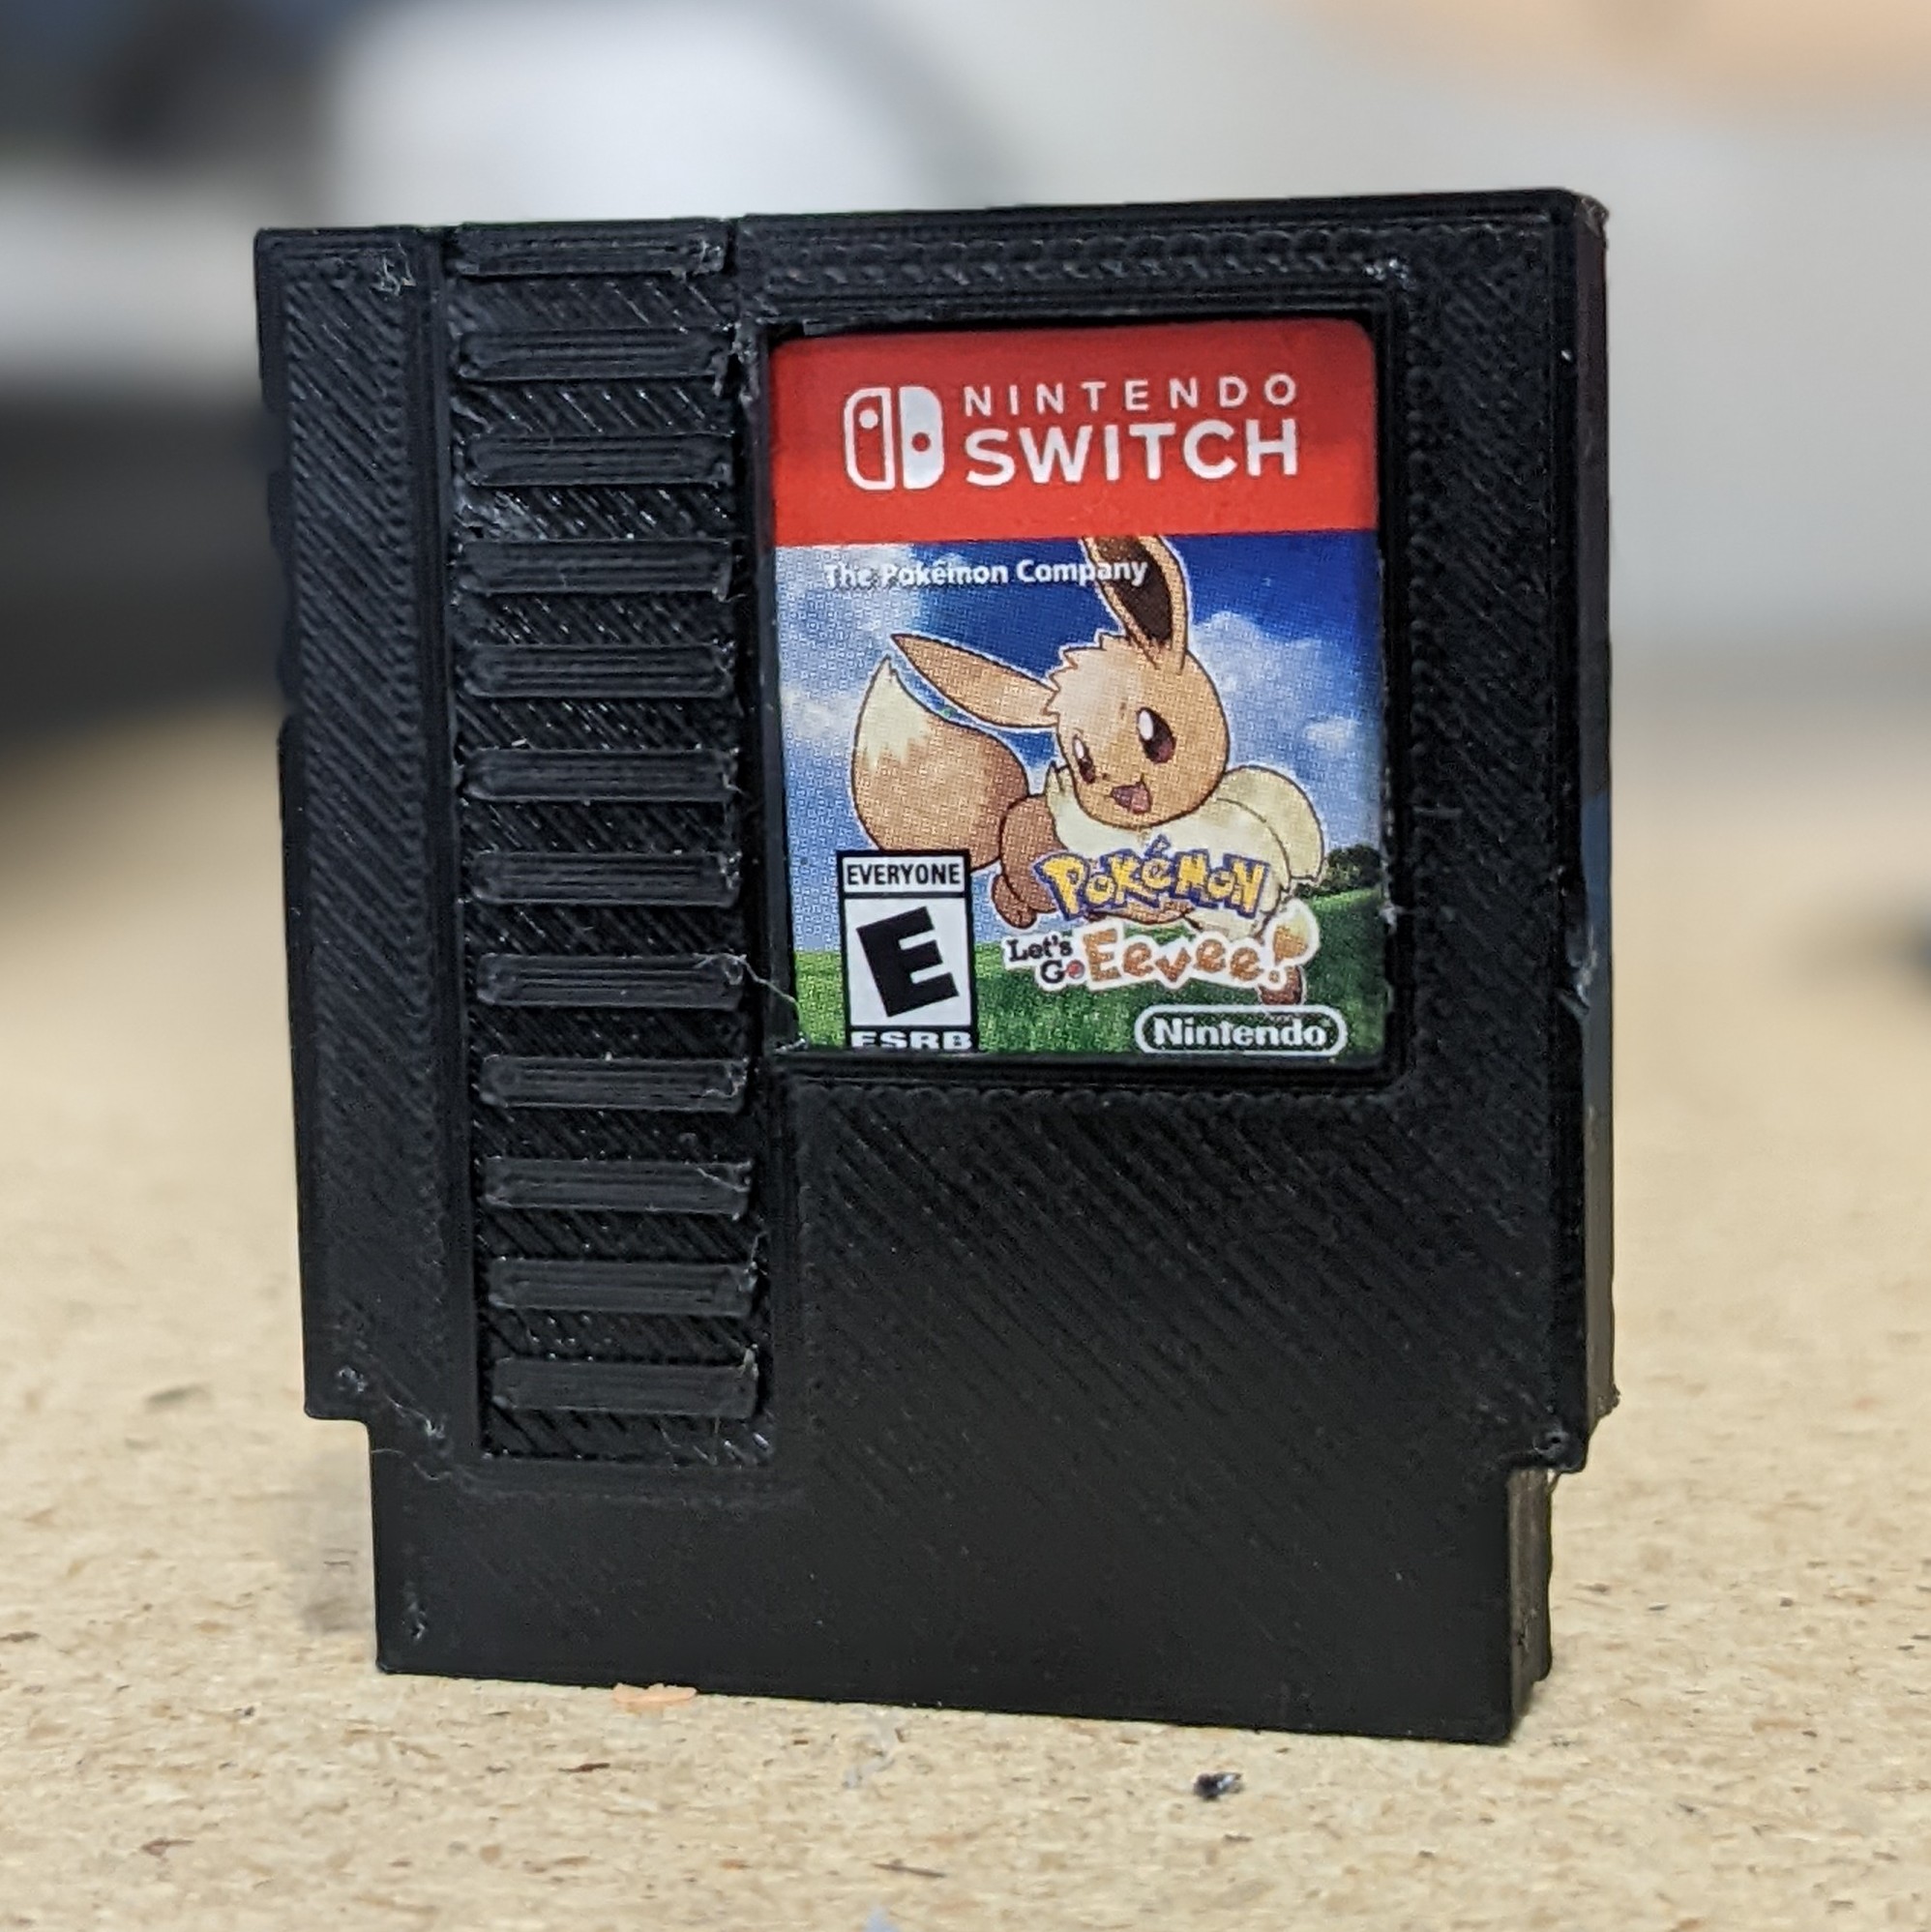 Nintendo Switch Cartrage NES Case